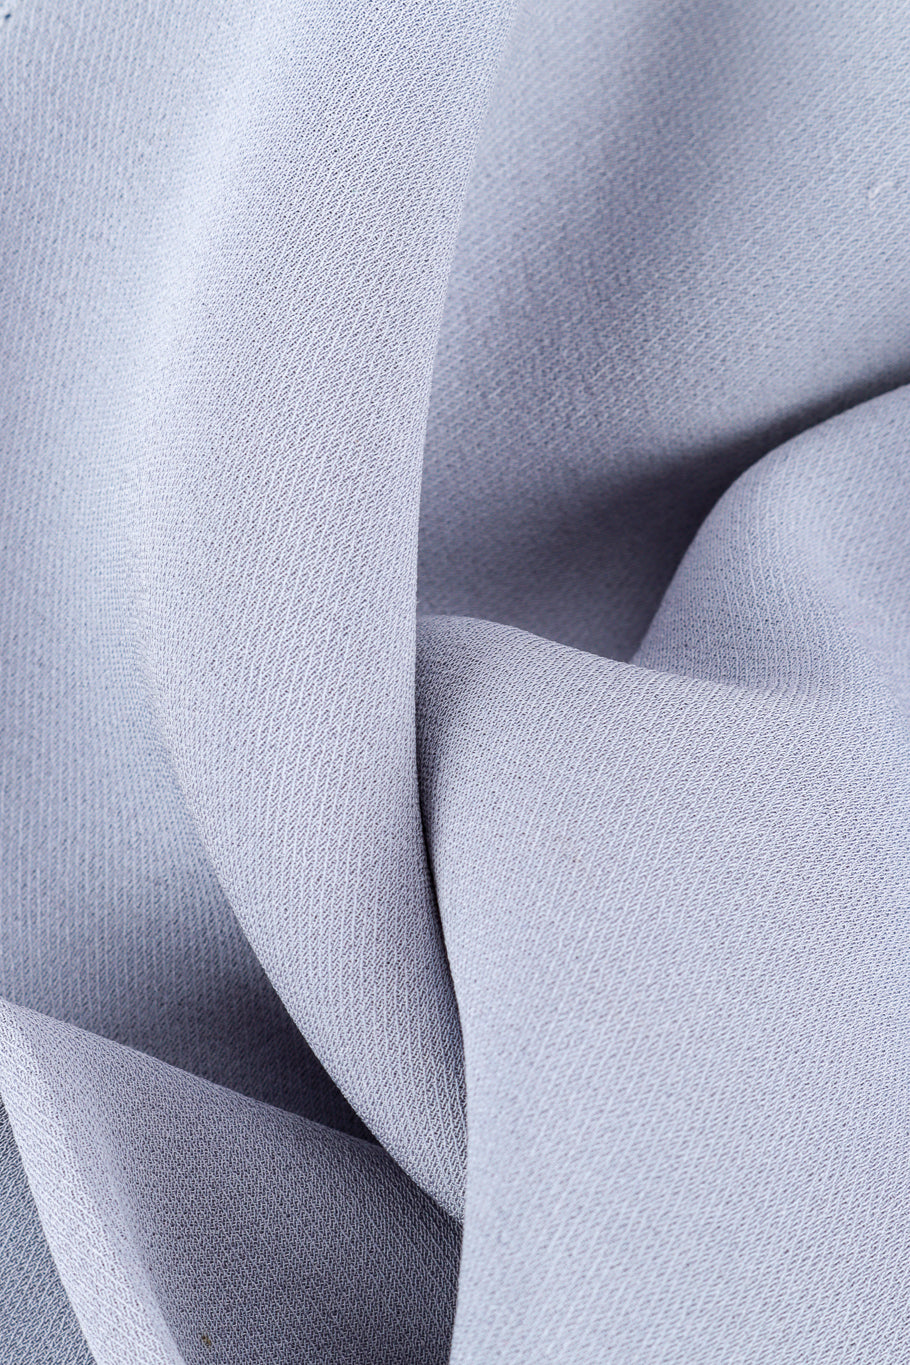 Chanel Boucle Jacket Three Piece Set fabric detail @RECESS LA